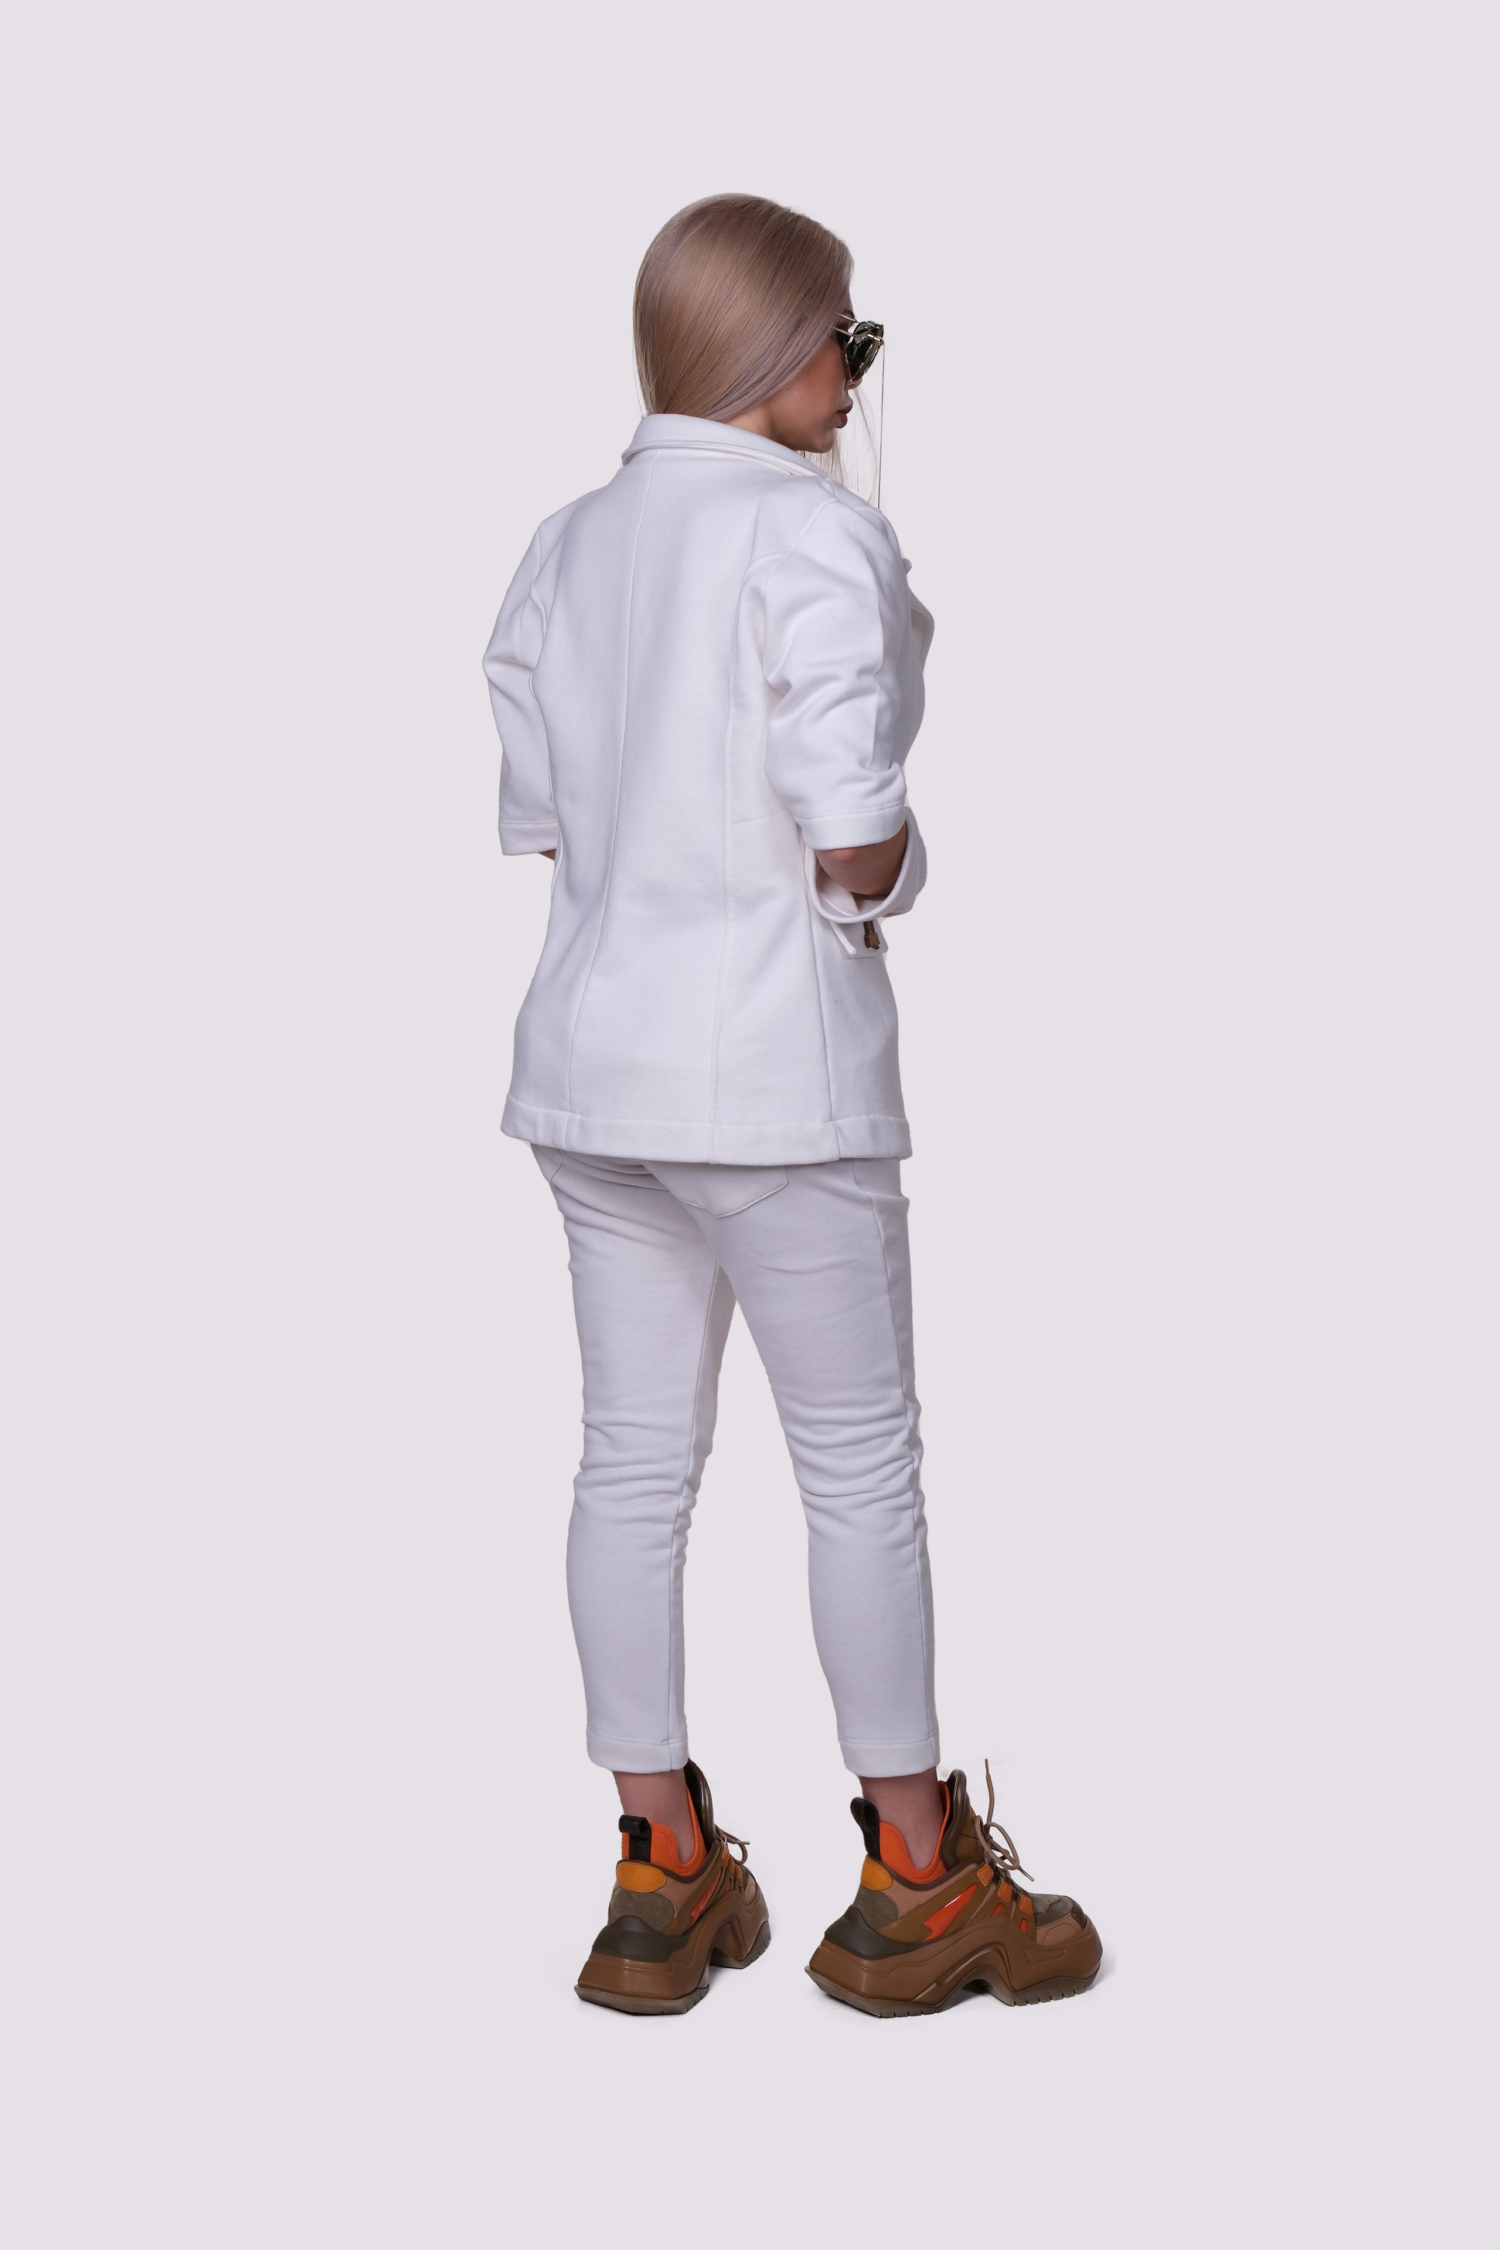 YAMM White Line Suit Jacket